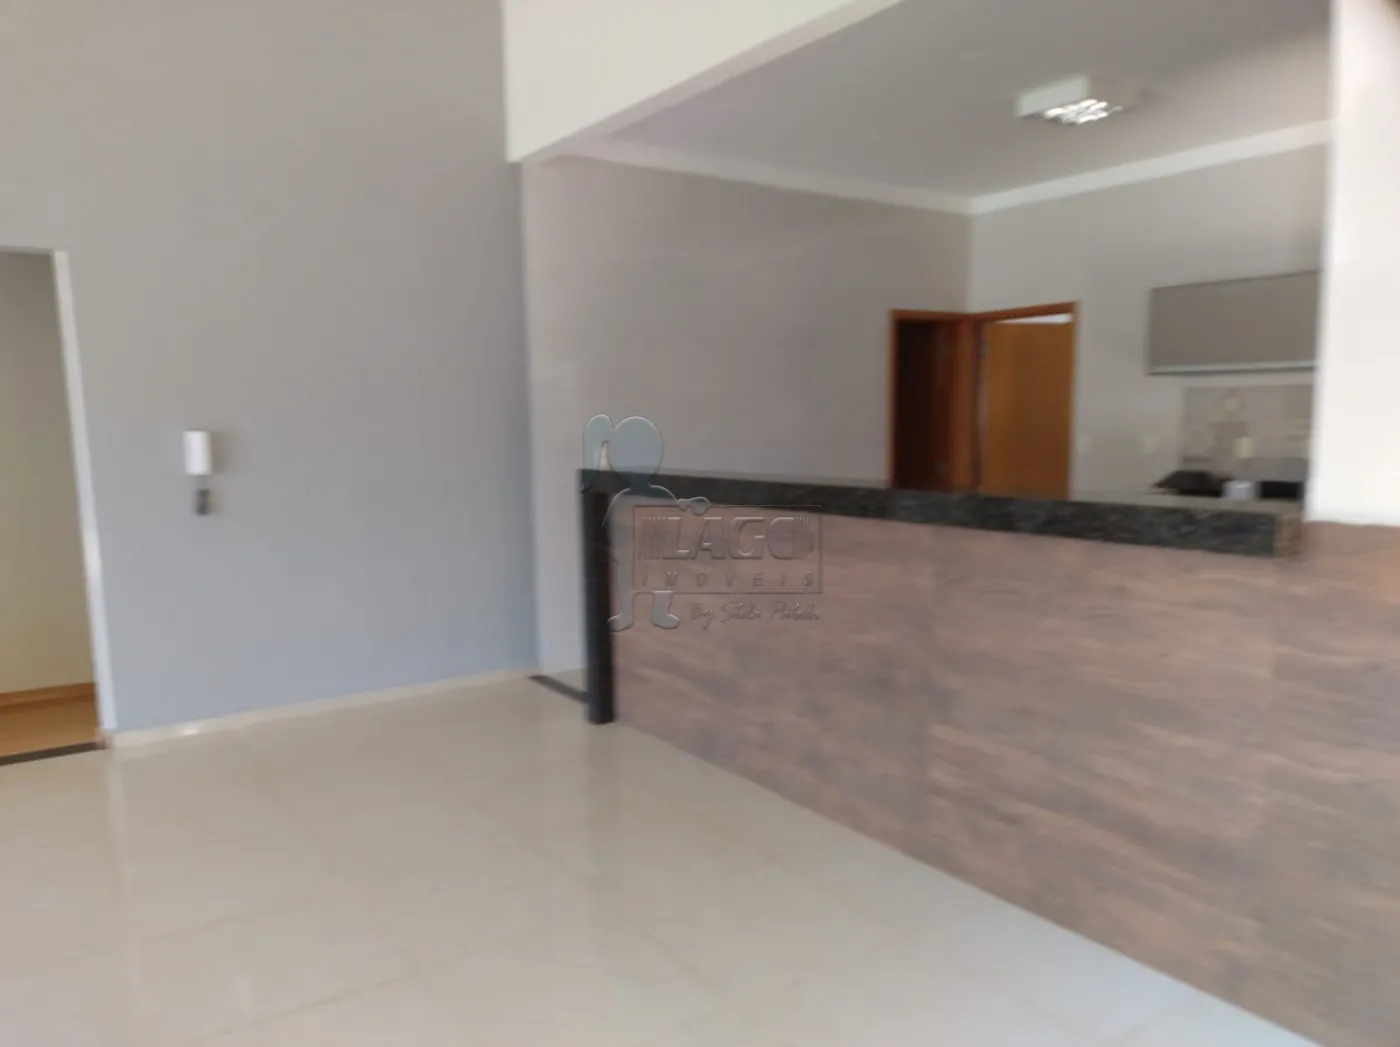 Alugar Casas / Condomínio em Jardinópolis R$ 3.500,00 - Foto 9